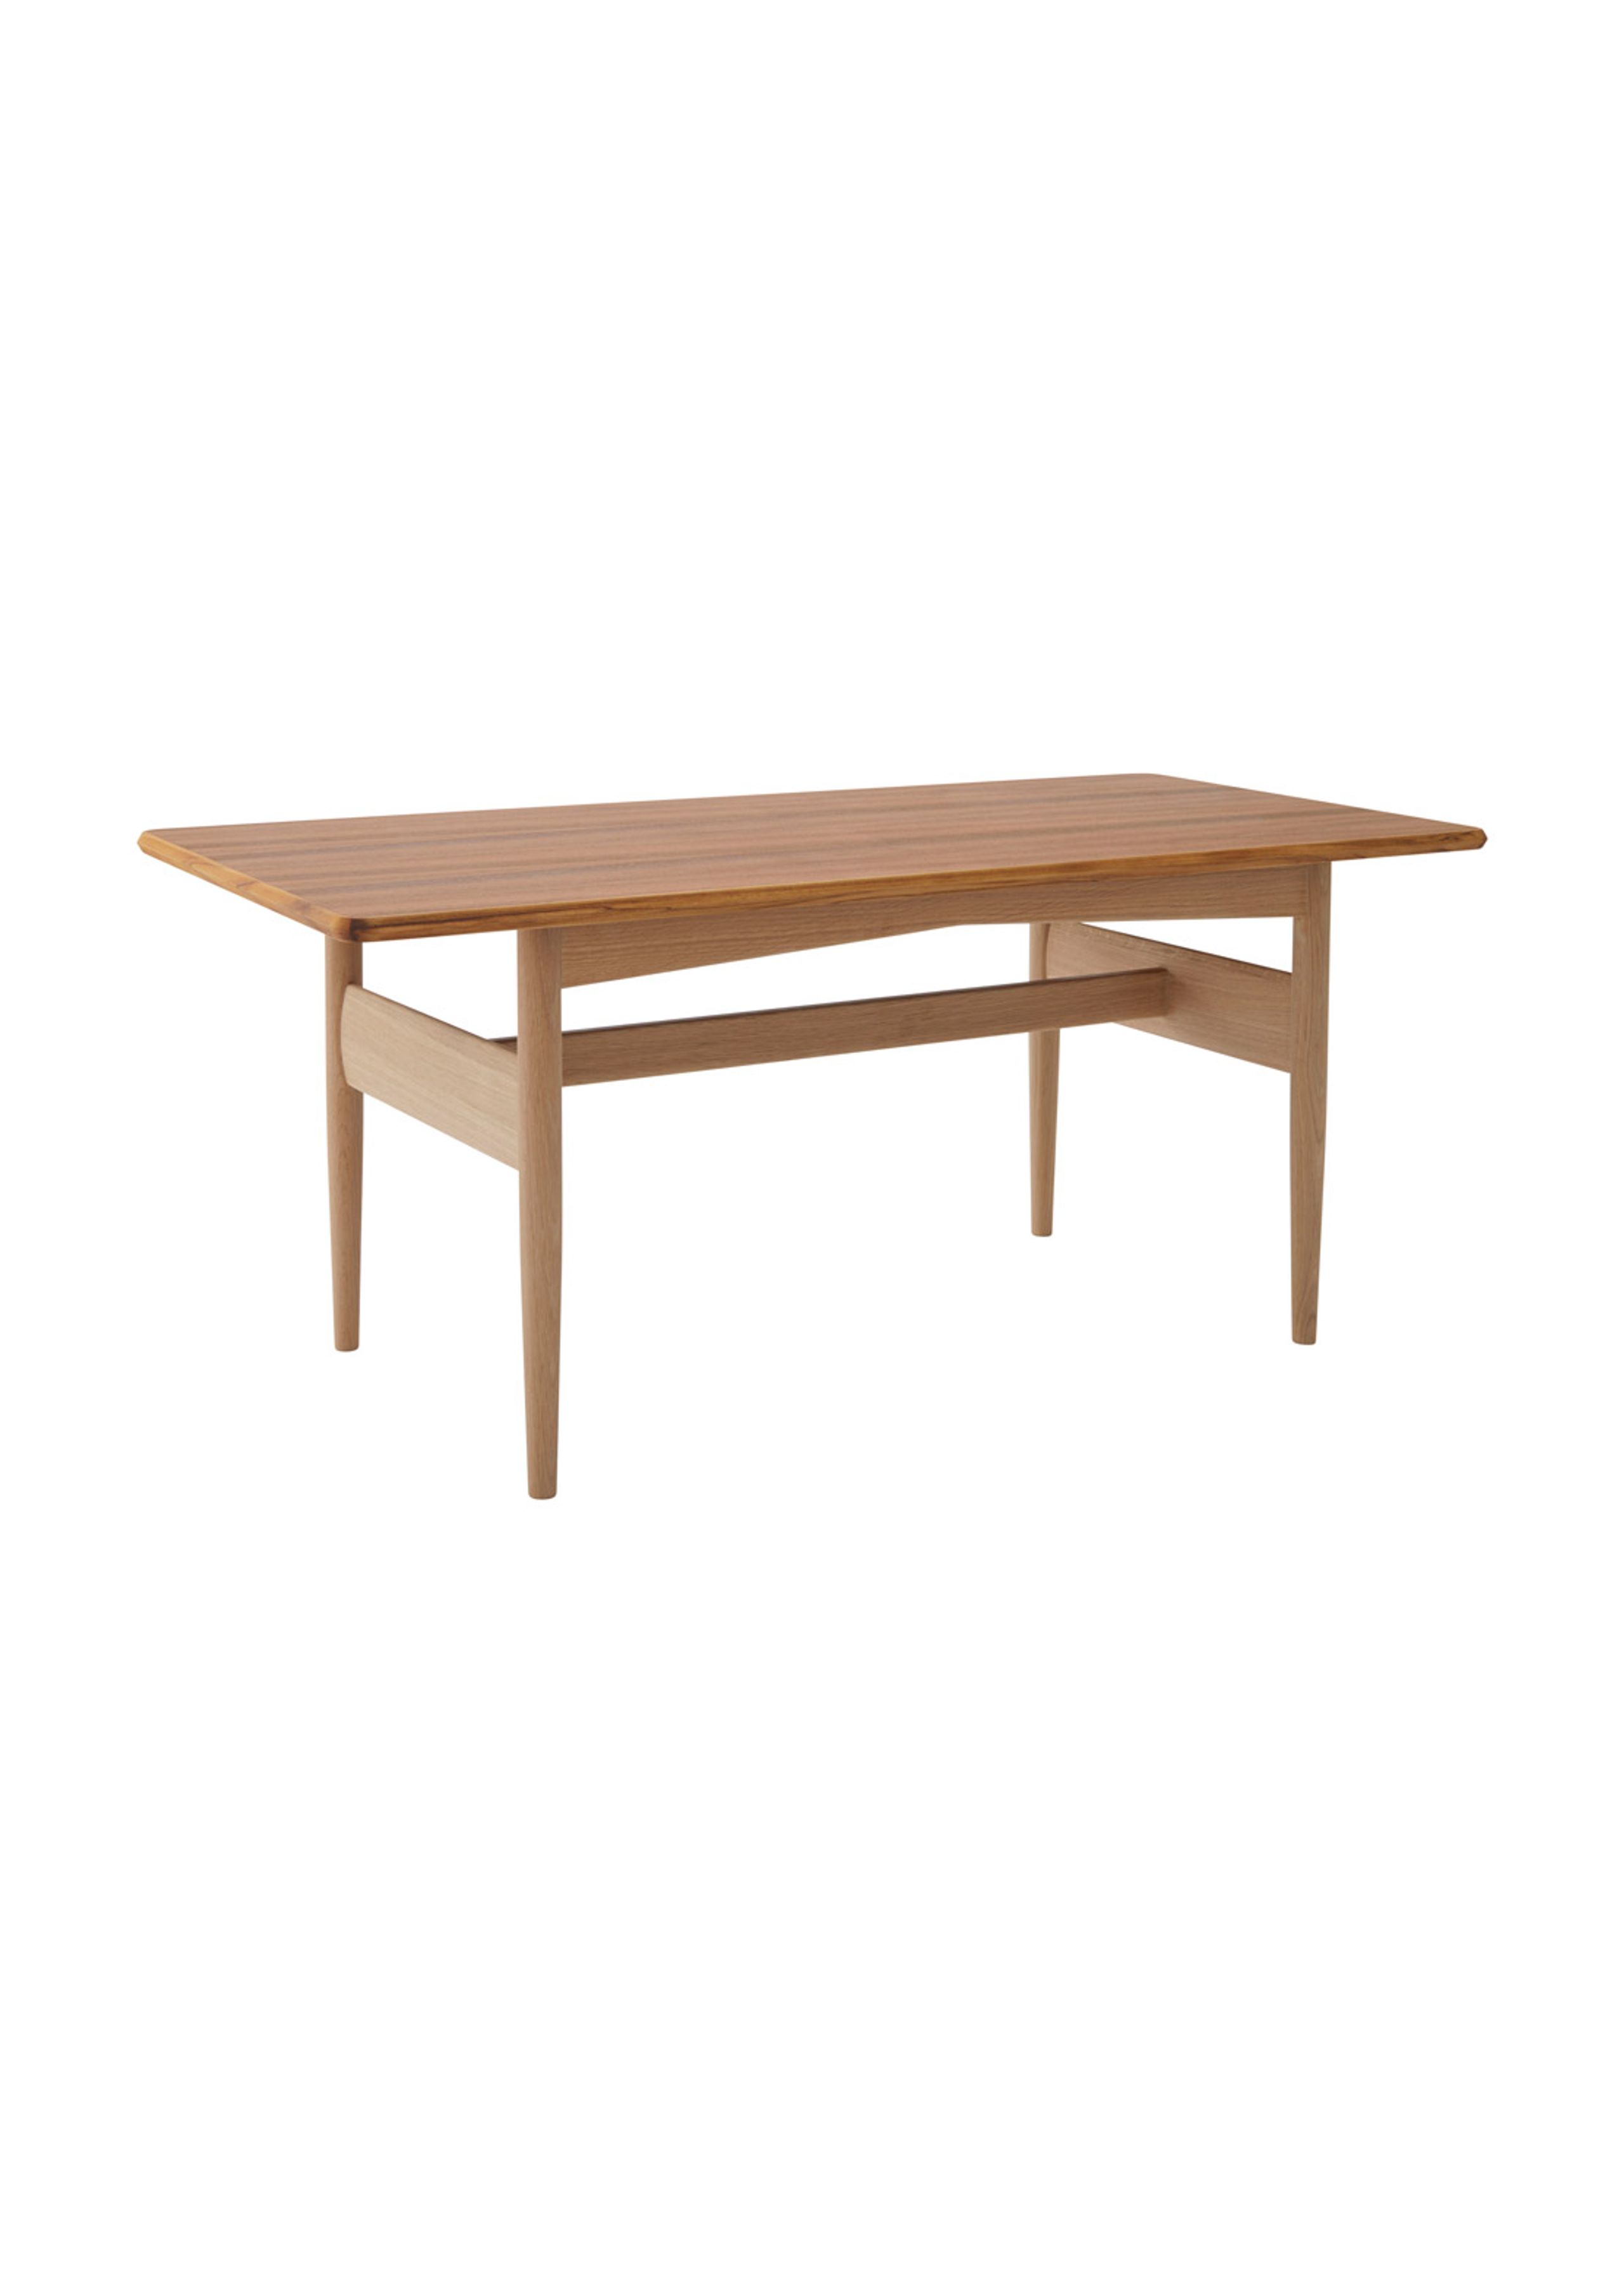 Magnus Olesen - Sofabord - Model 107 Coffee Table - Frame: White oiled oak / Table top: Oiled teak veneer w/solid teak edge